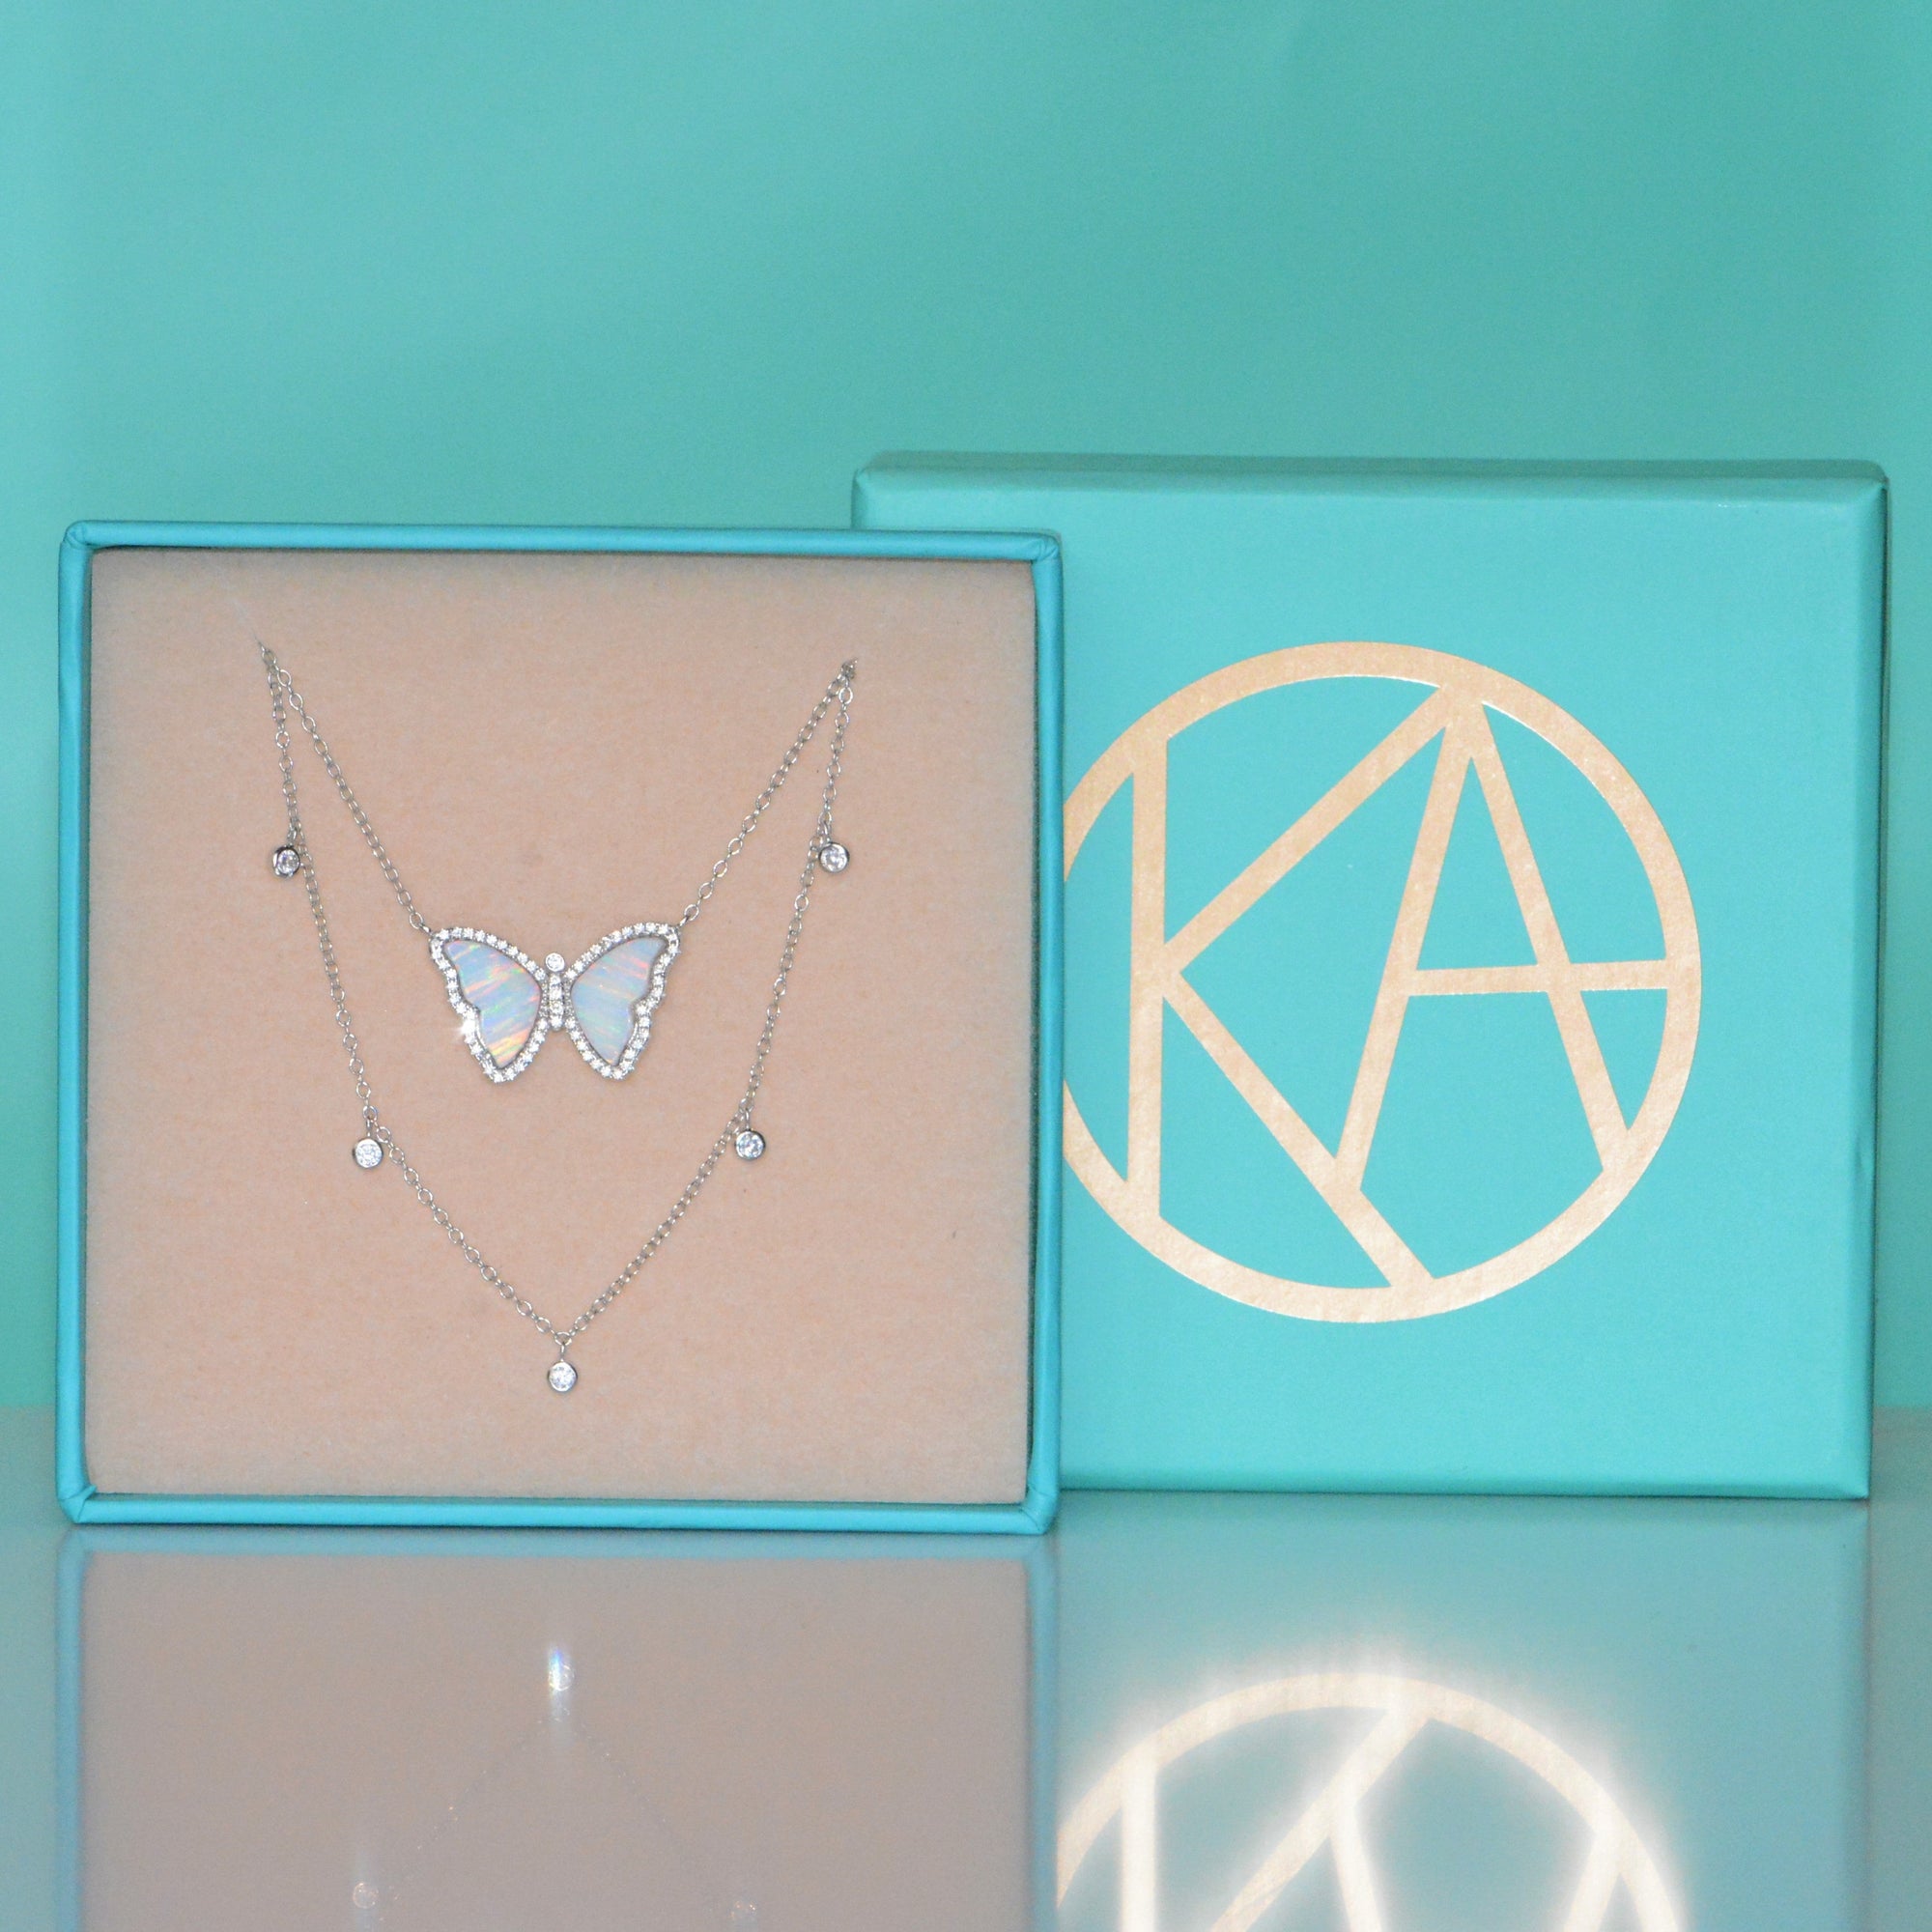 Gift Set | Opal Butterfly Necklace + Silver Choker